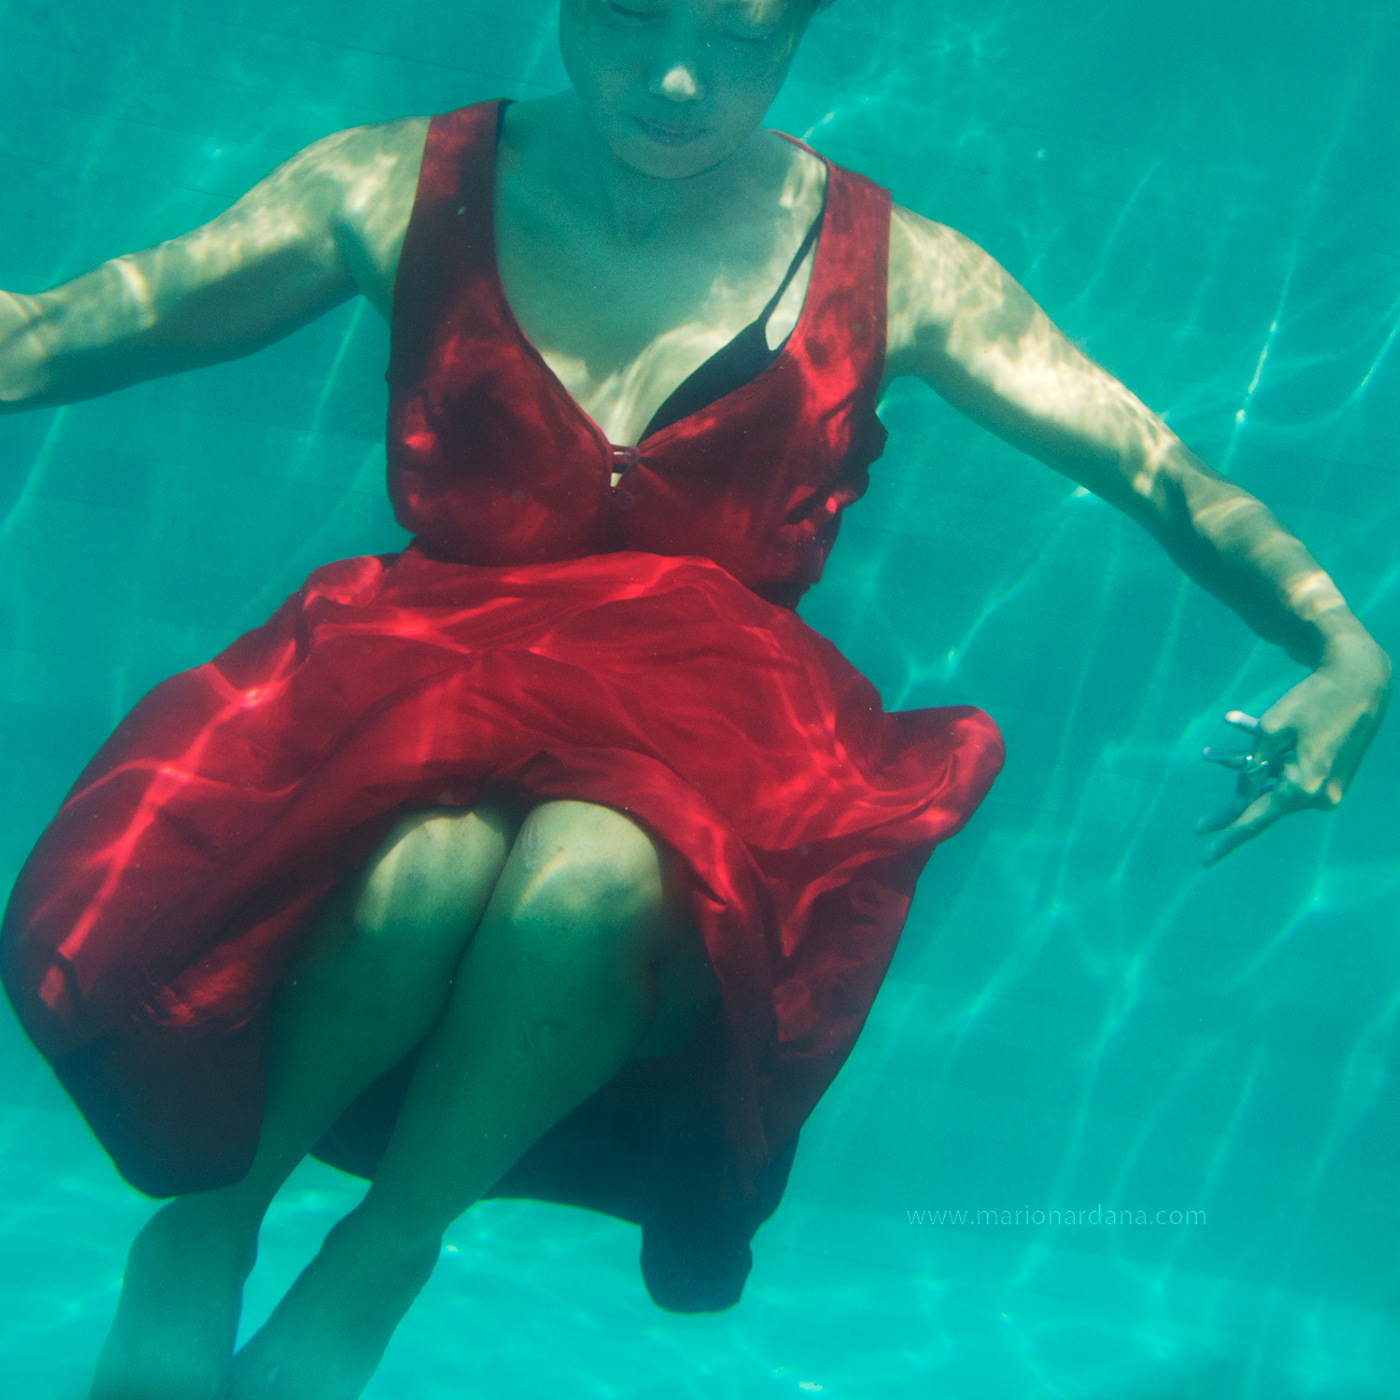 dark Pool portrait water Photography  submerged underwater UNDERWATER PHOTOGRAPHY Underwater Portraits